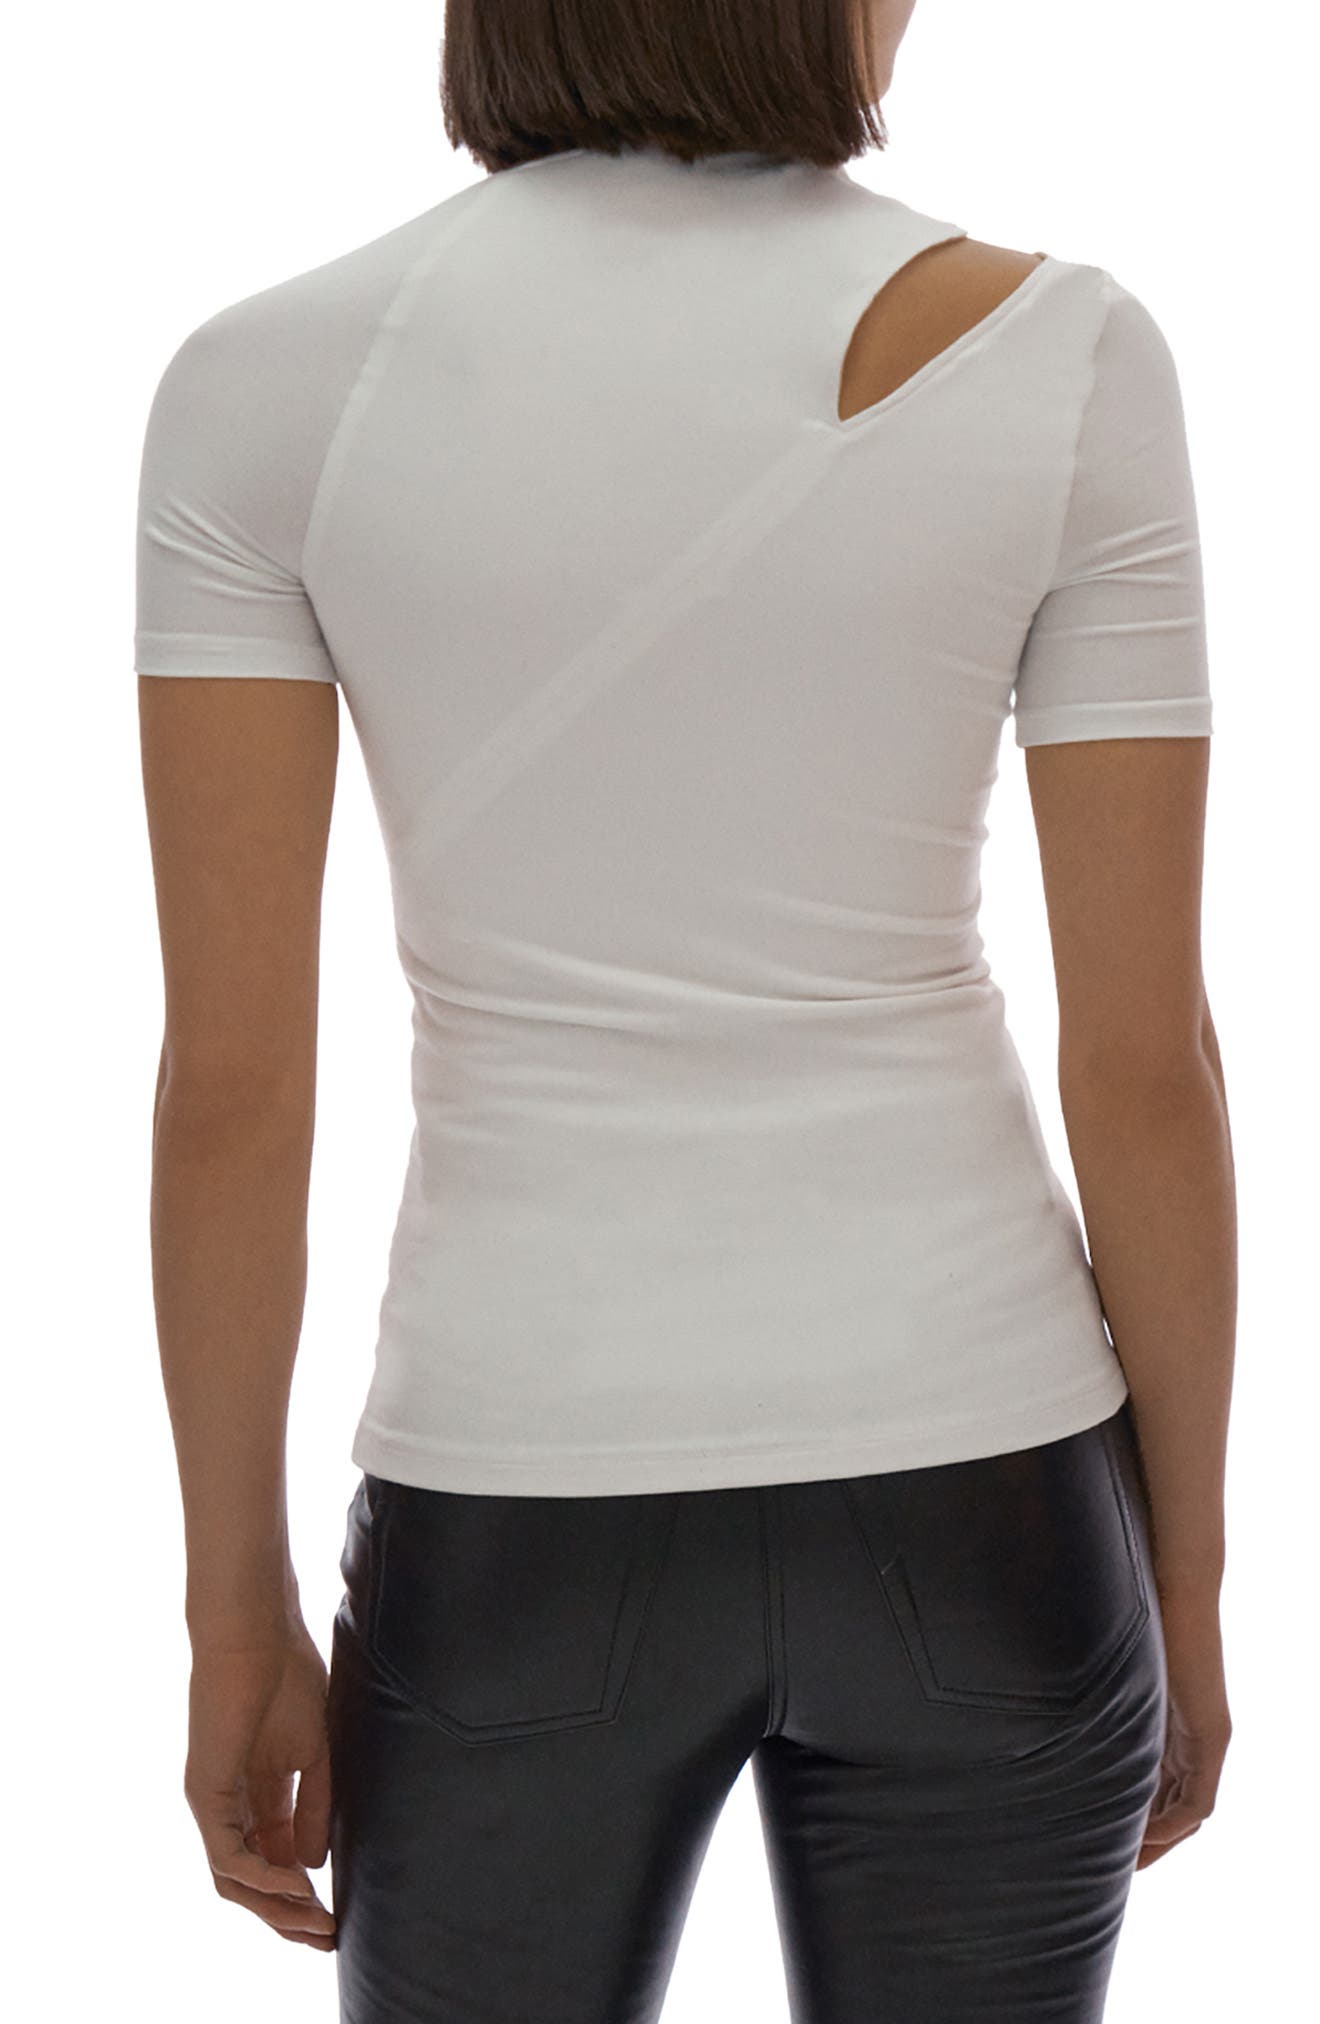 Red/White XL discount 65% Beesk T-shirt WOMEN FASHION Shirts & T-shirts Asymmetric 